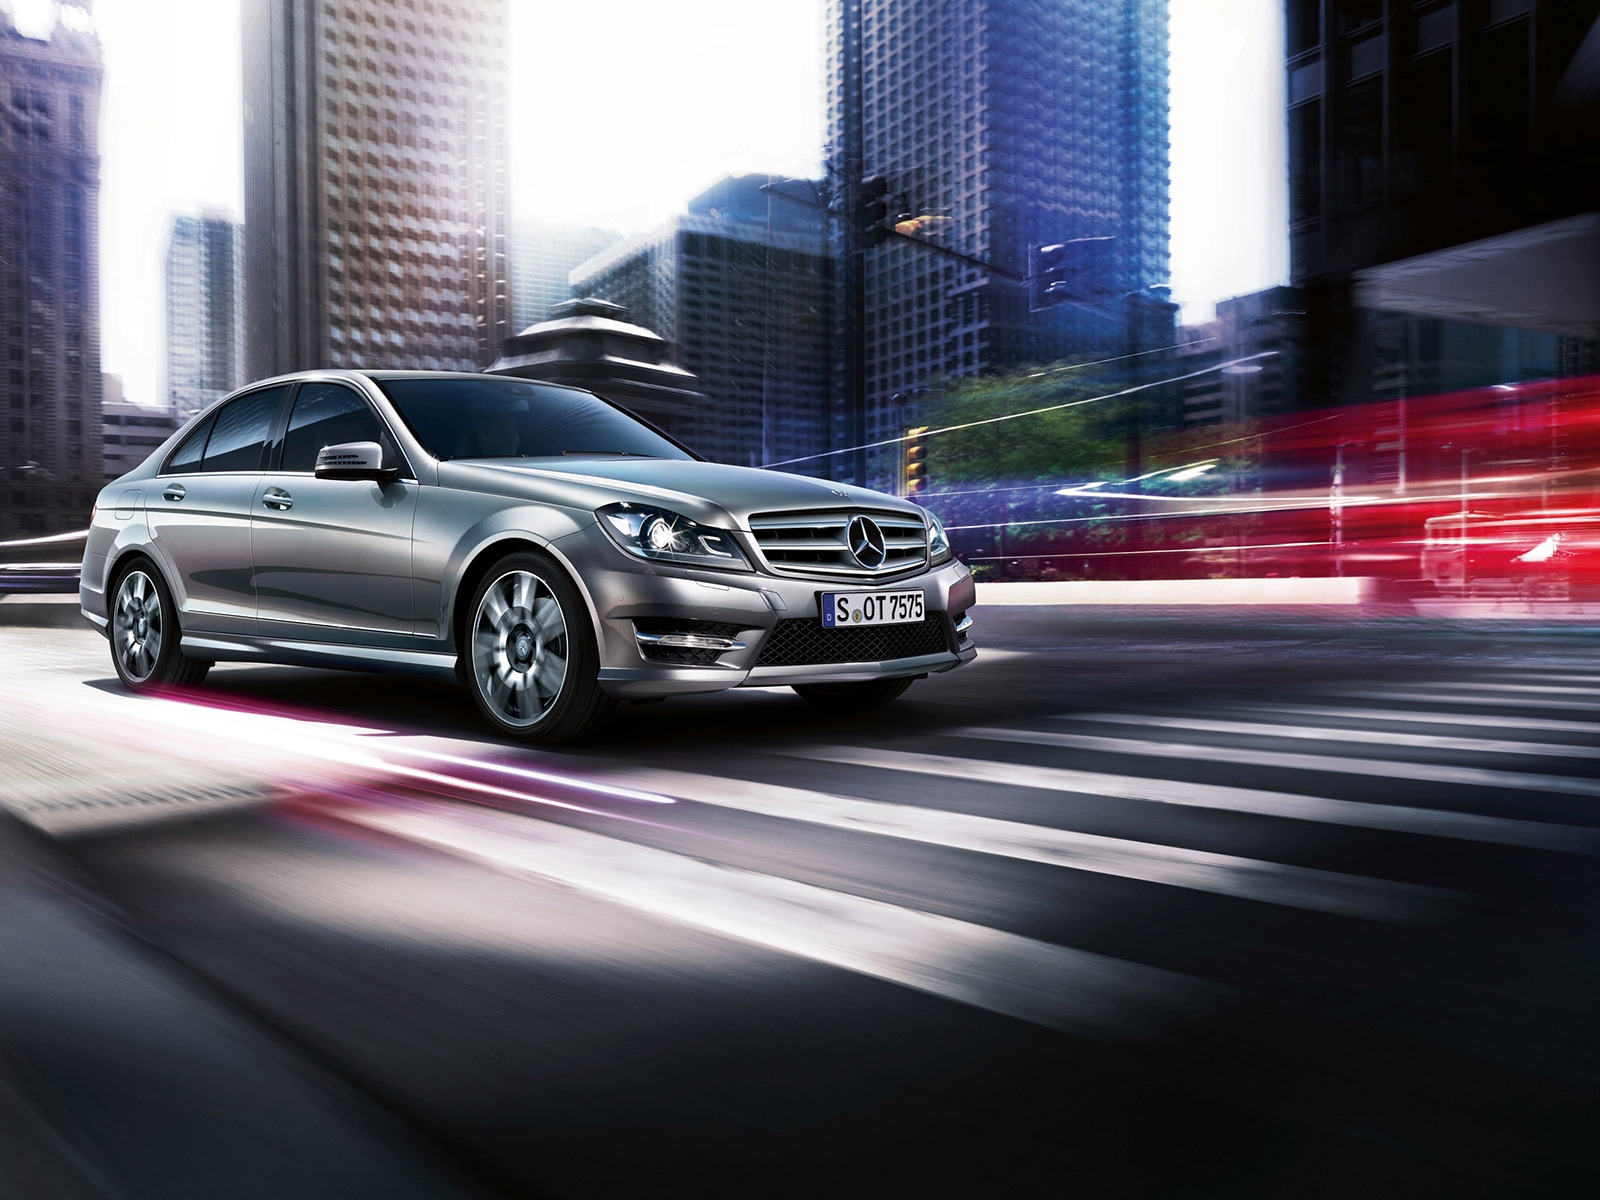 2013 Mercedes-Benz C Class for 1600 x 1200 resolution